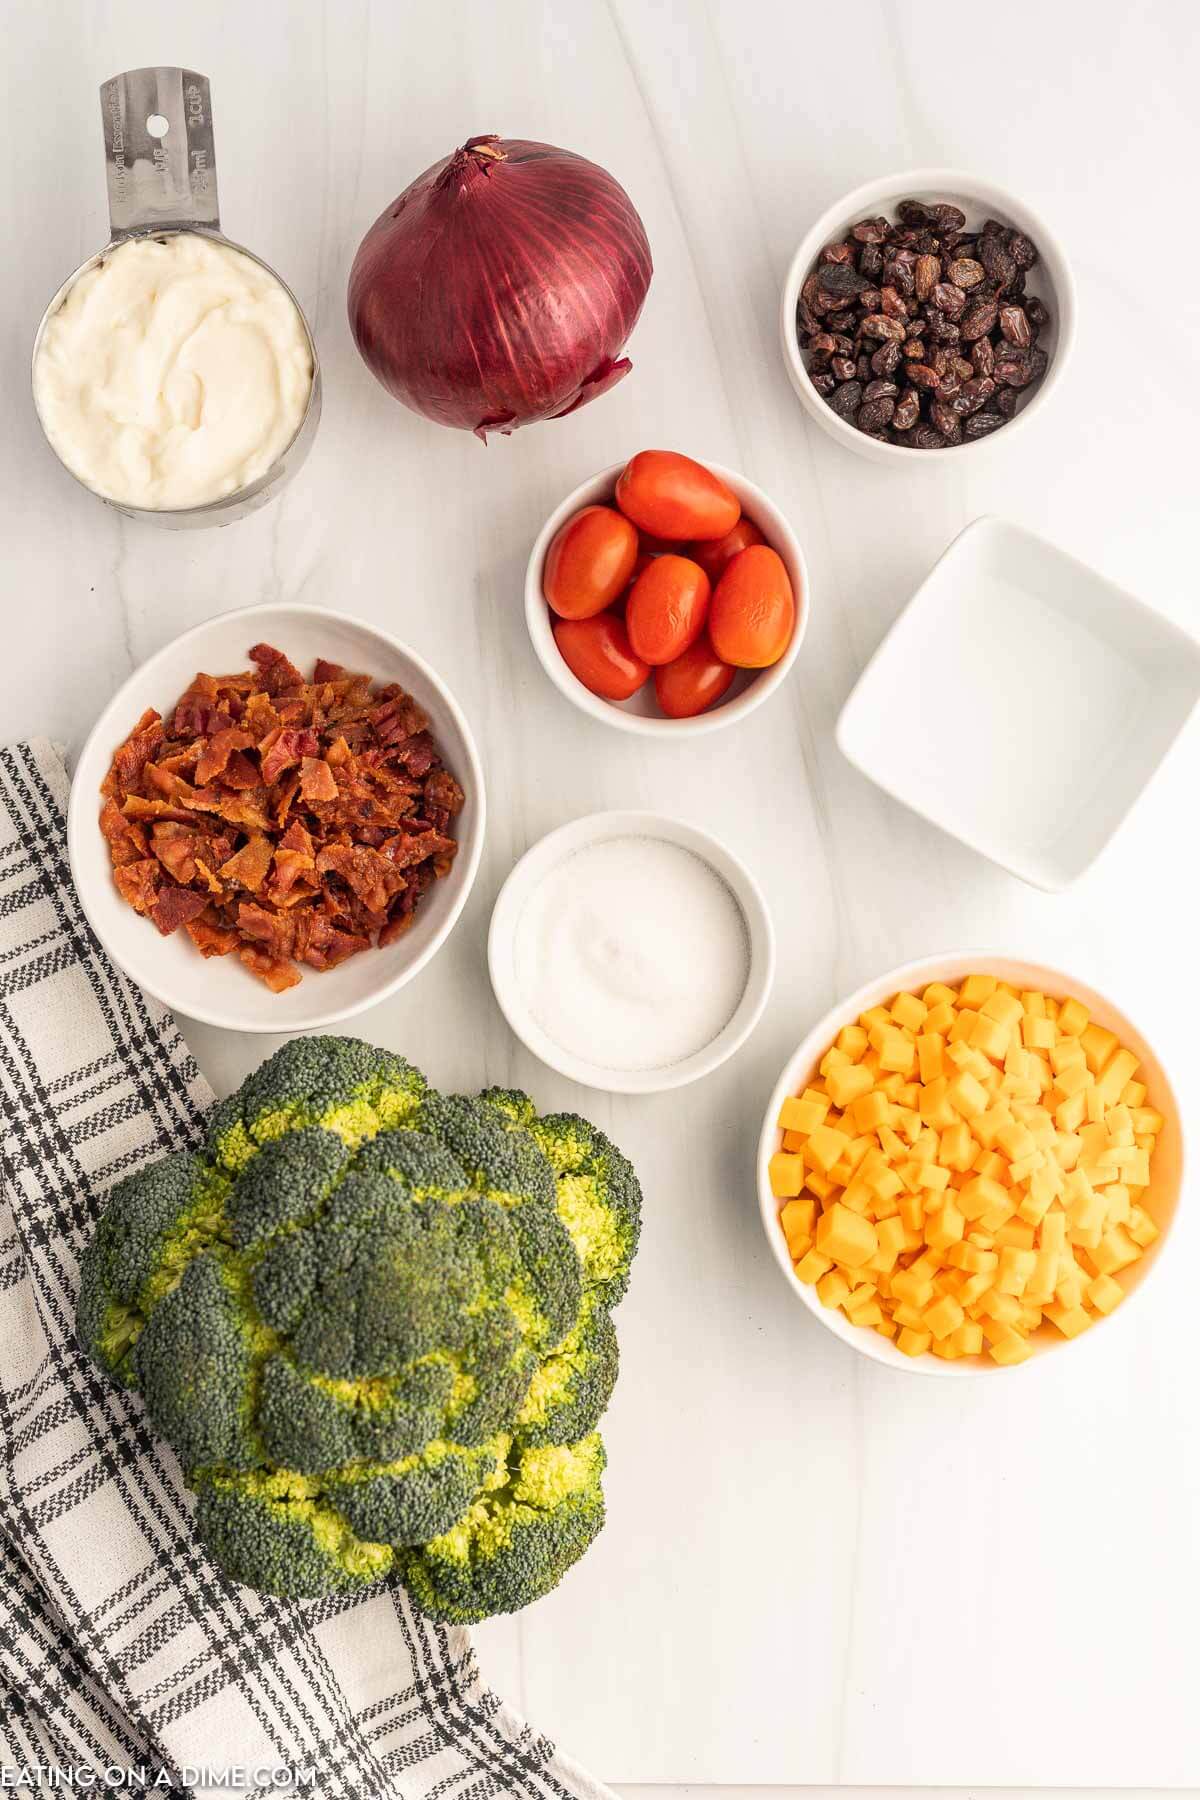 Paula Deen's Broccoli Salad Recipe - Eating on a Dime